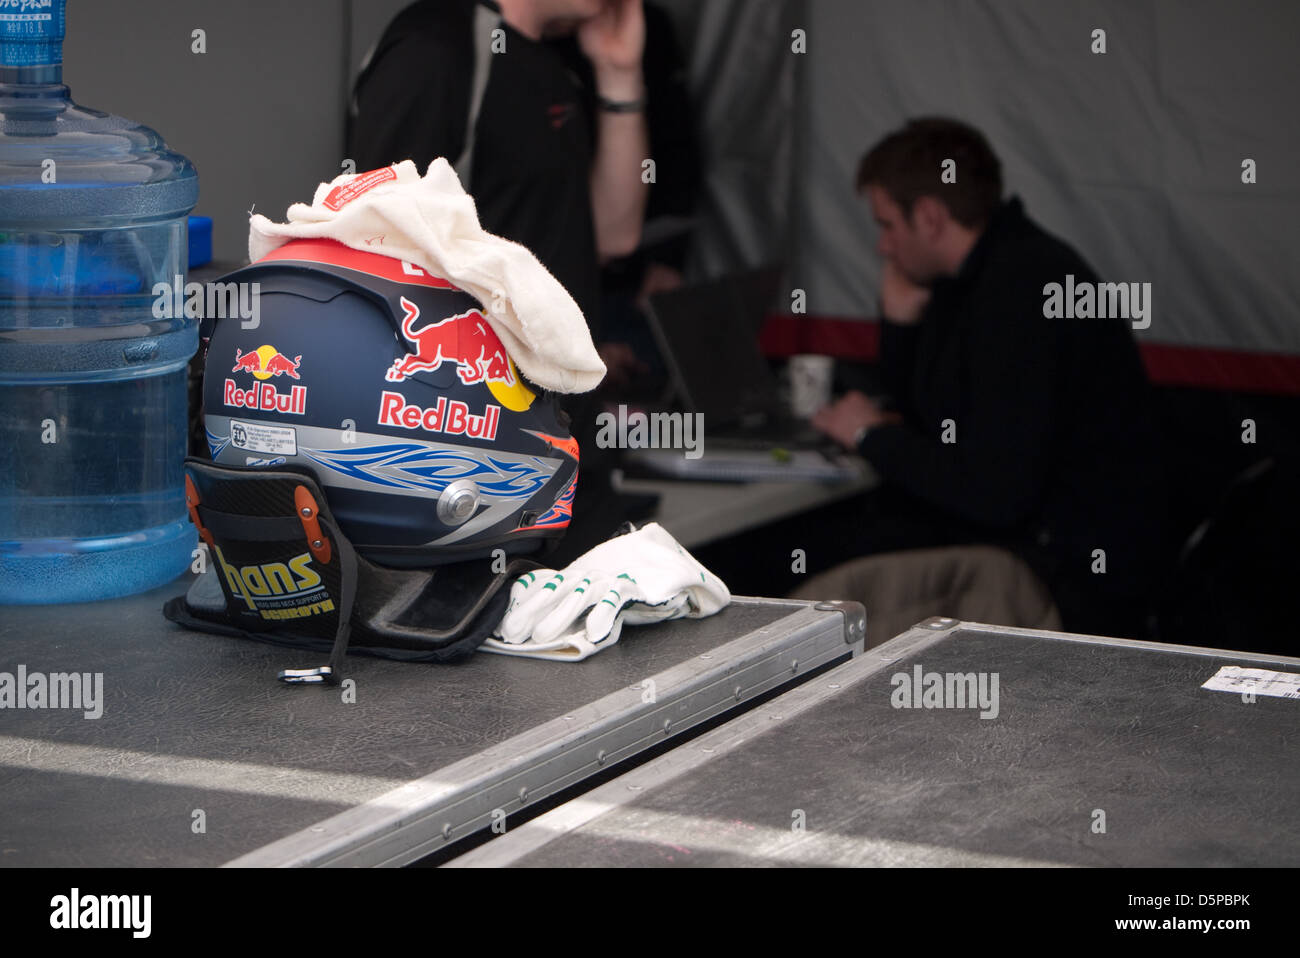 Fahrerlager, racing, Helm mit red Bull Sponsoring, Motorsport Stockfoto